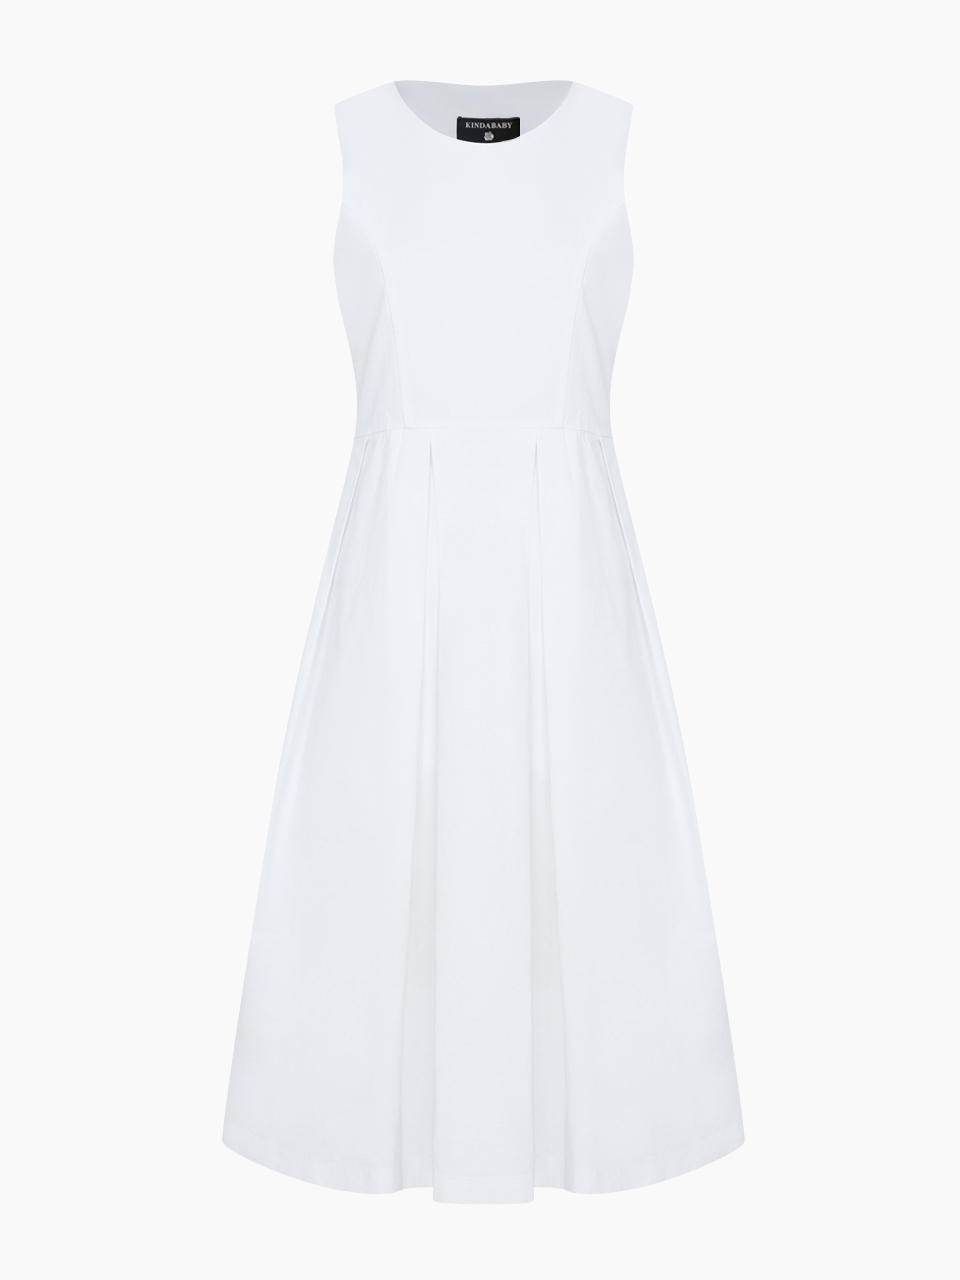 Basic cotton pleats dress - white